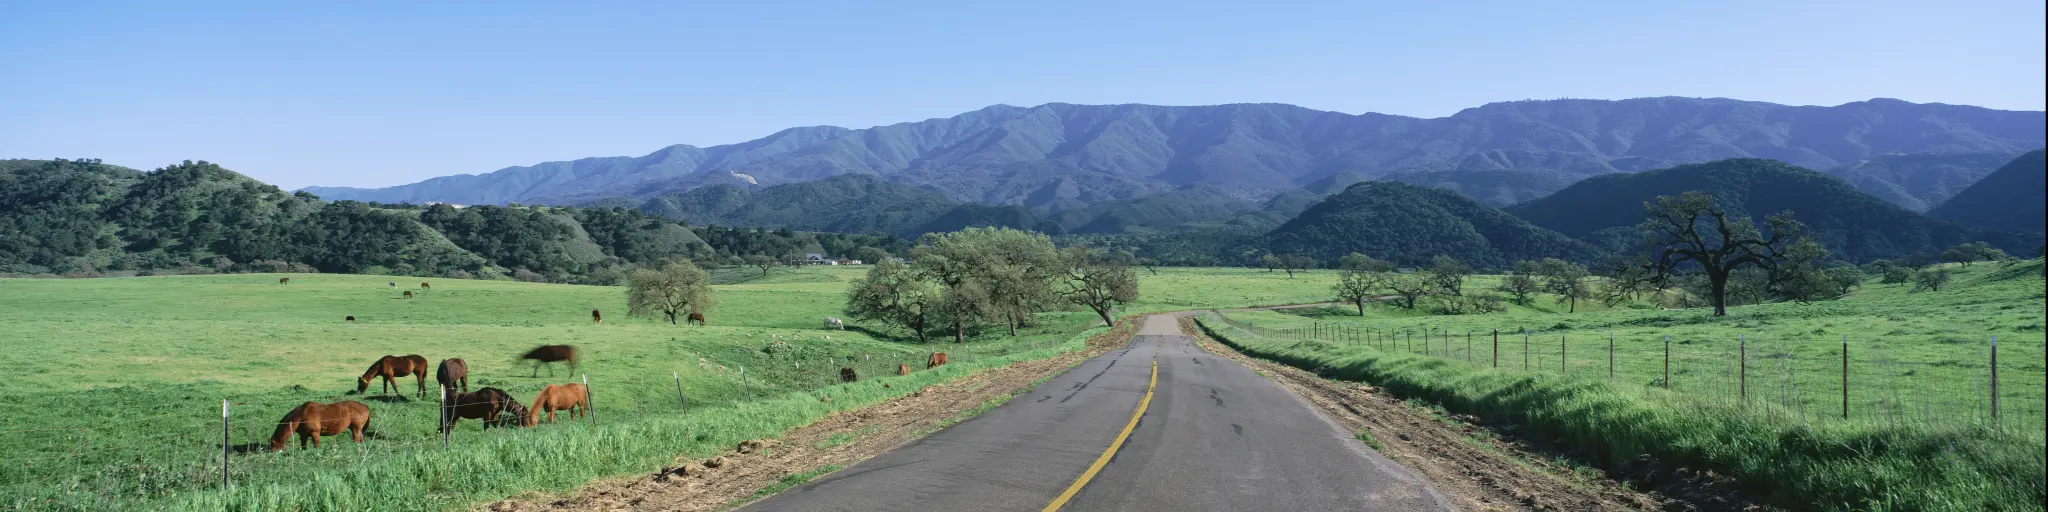 Scenic country road through California near Santa Barbara.